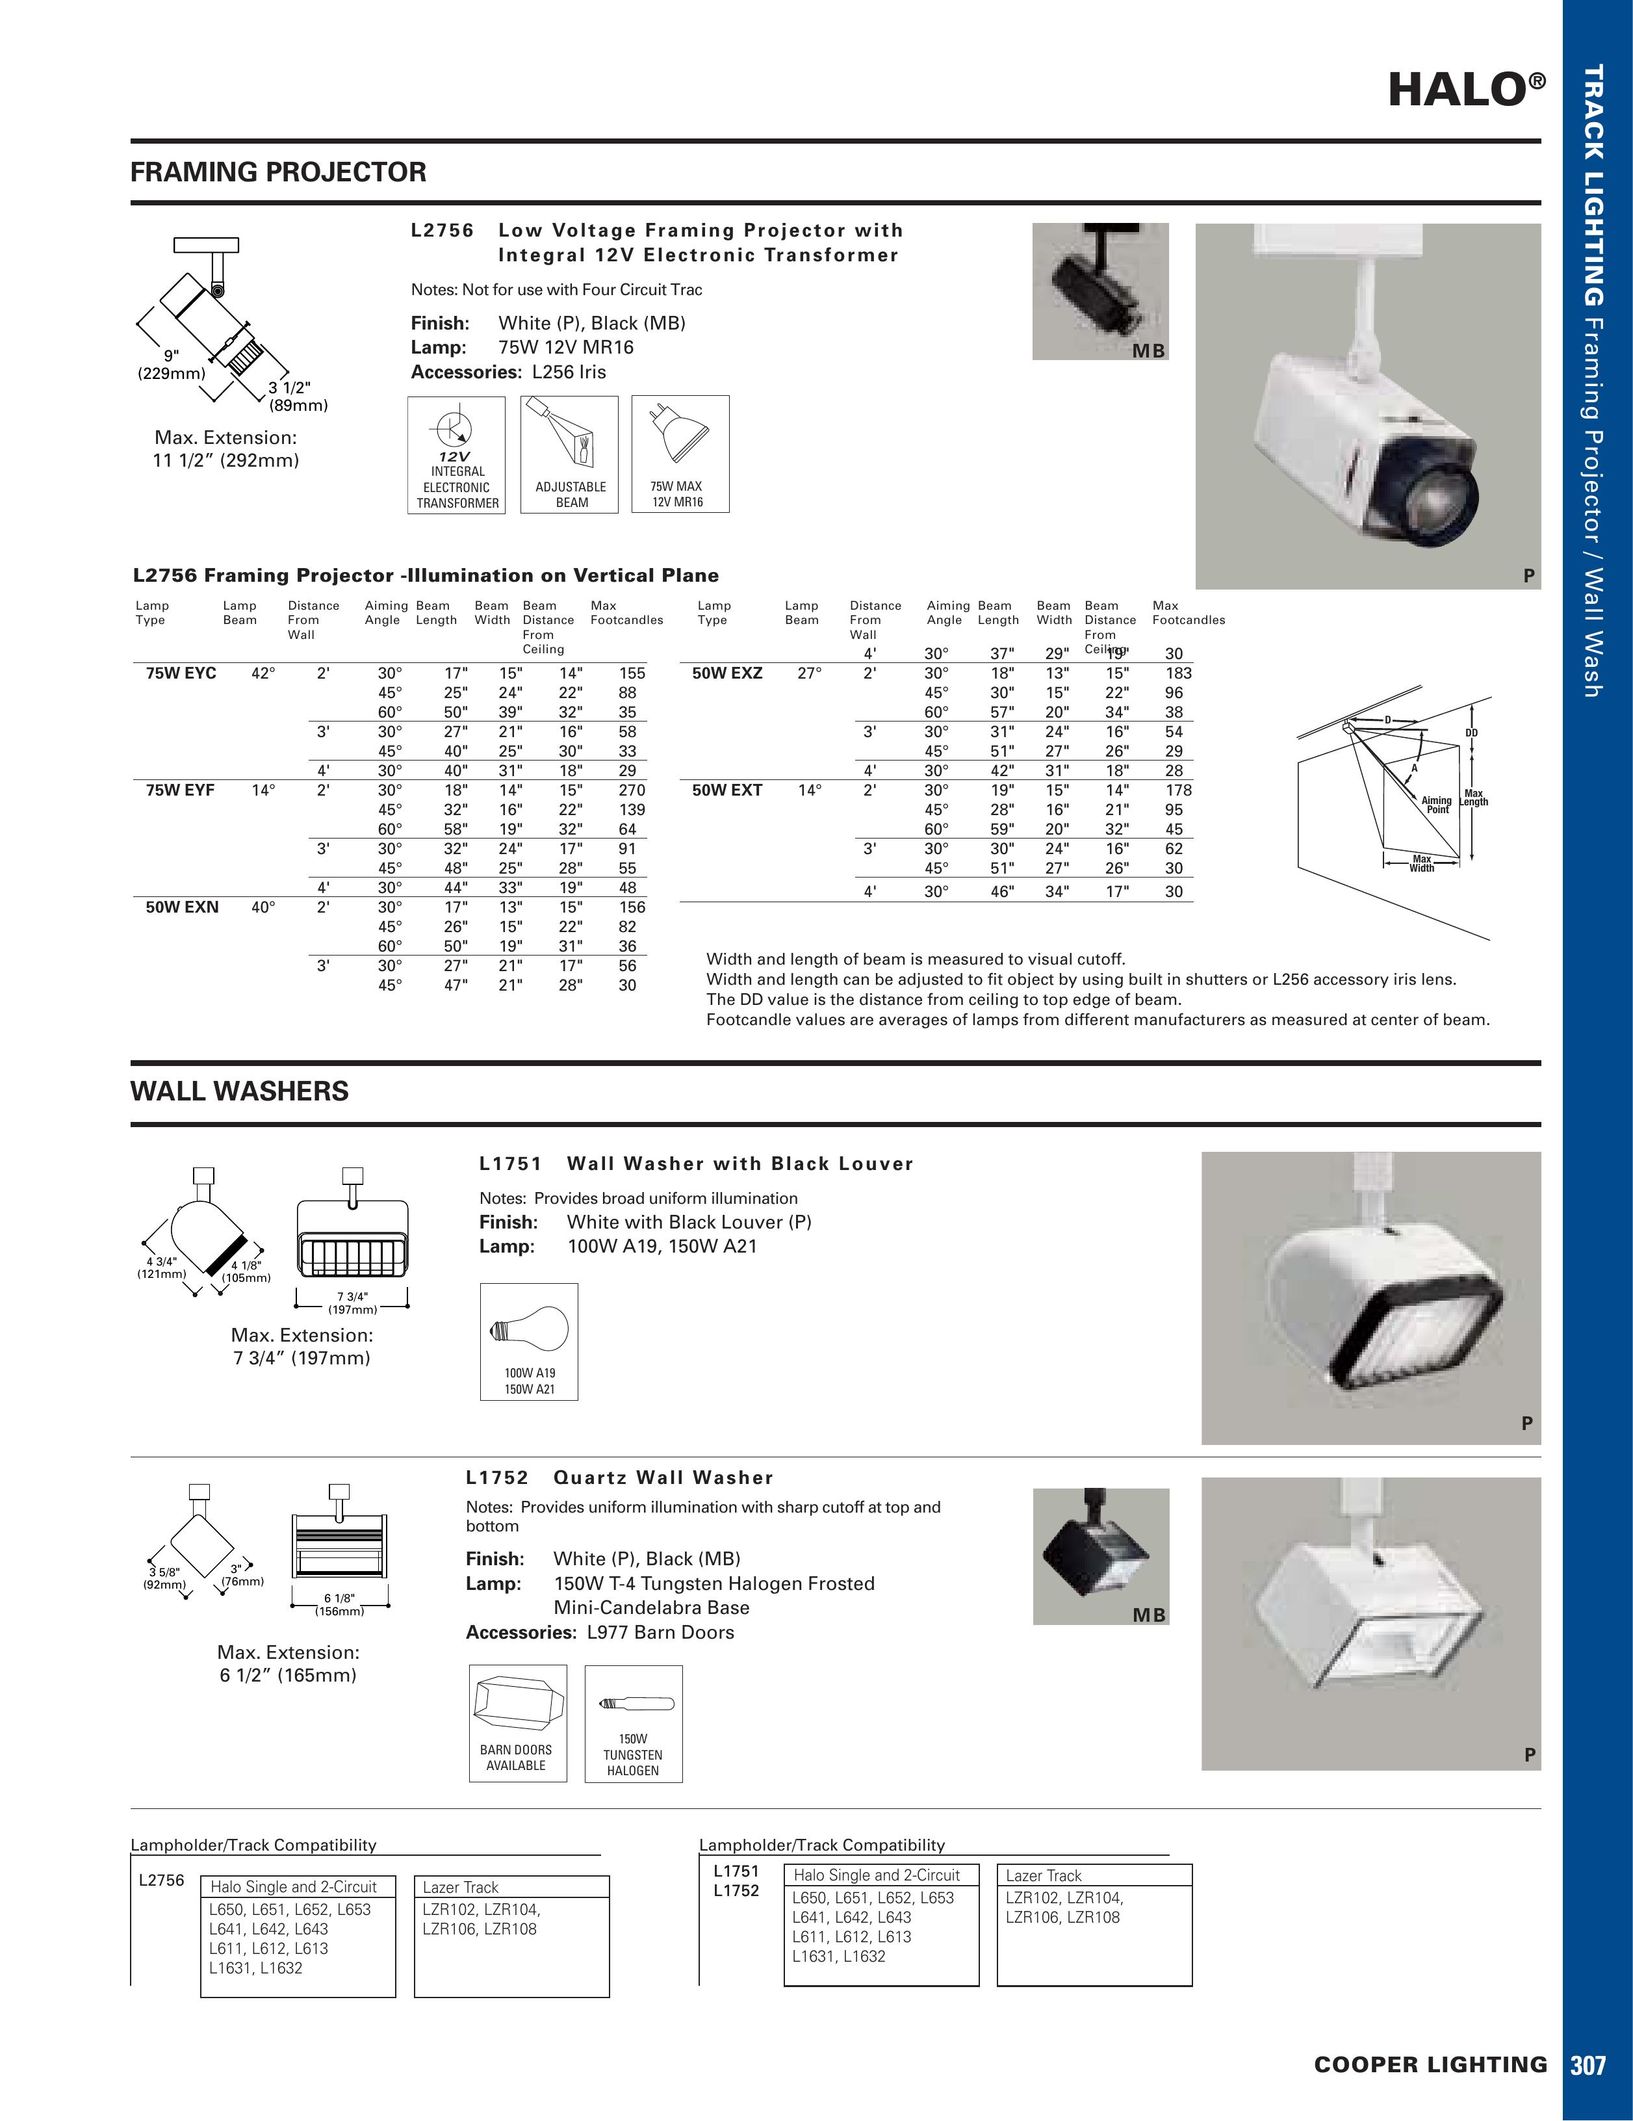 Cooper Lighting L2756 Projector User Manual